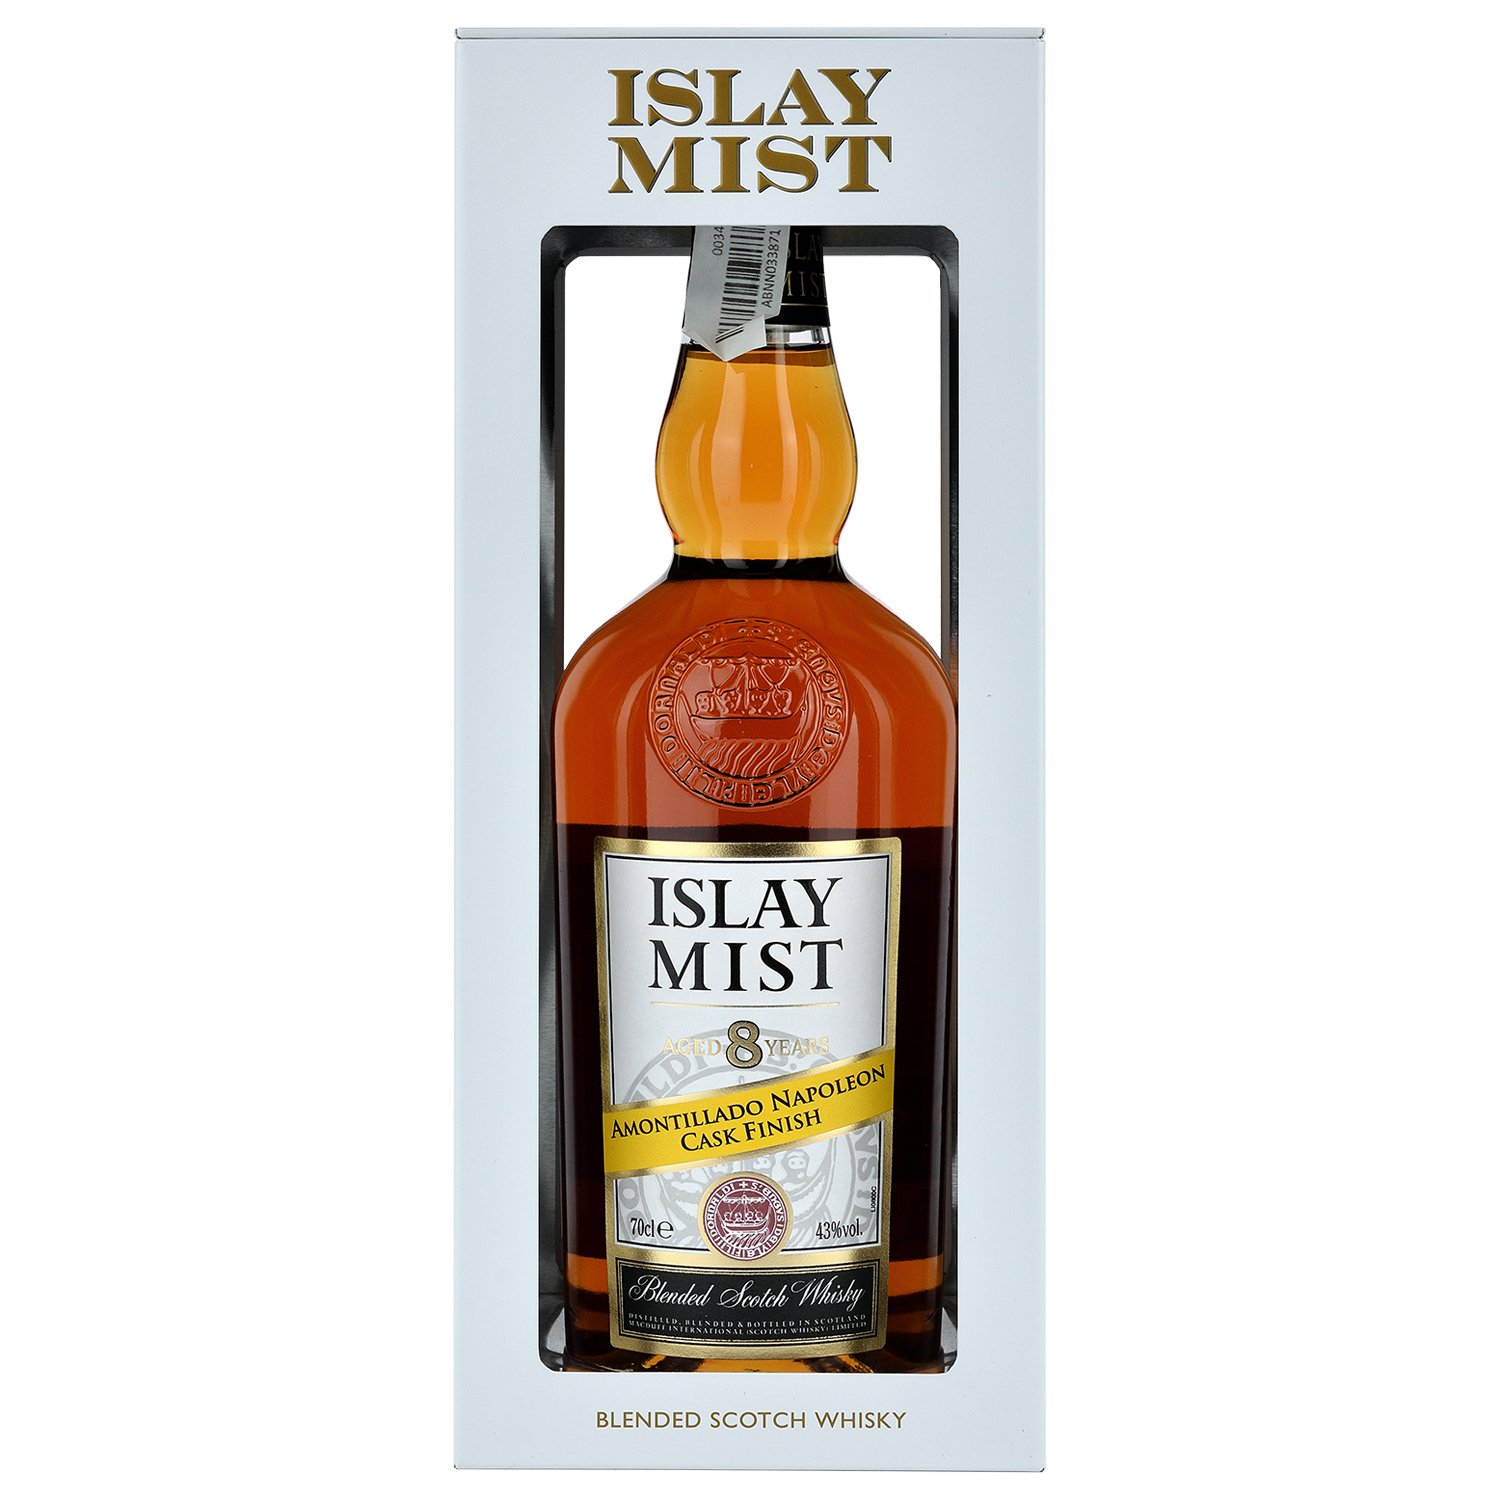 Віскі Islay Mist Amontillado Napoleon Cask Finish Blended Scotch Whisky 8 yo, 43%, 0,7 л - фото 1